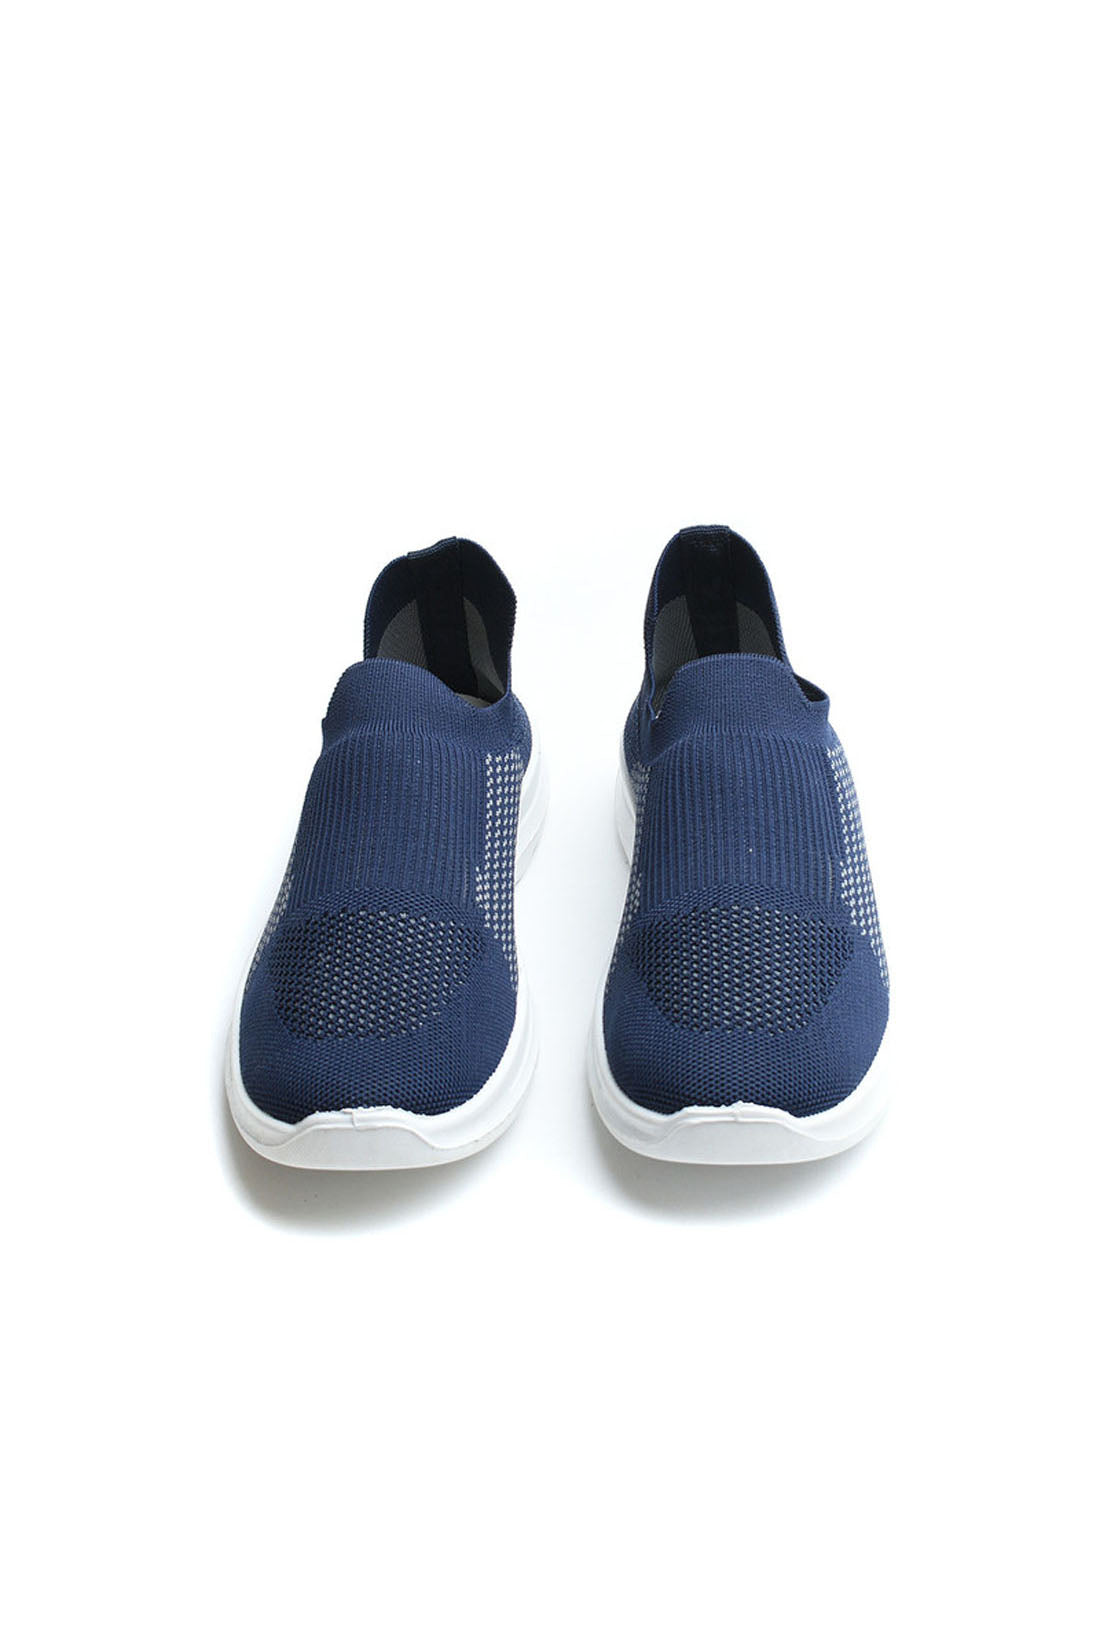 Knit Sneakers - Sportive Canvas Sock - Slip-On - Navy